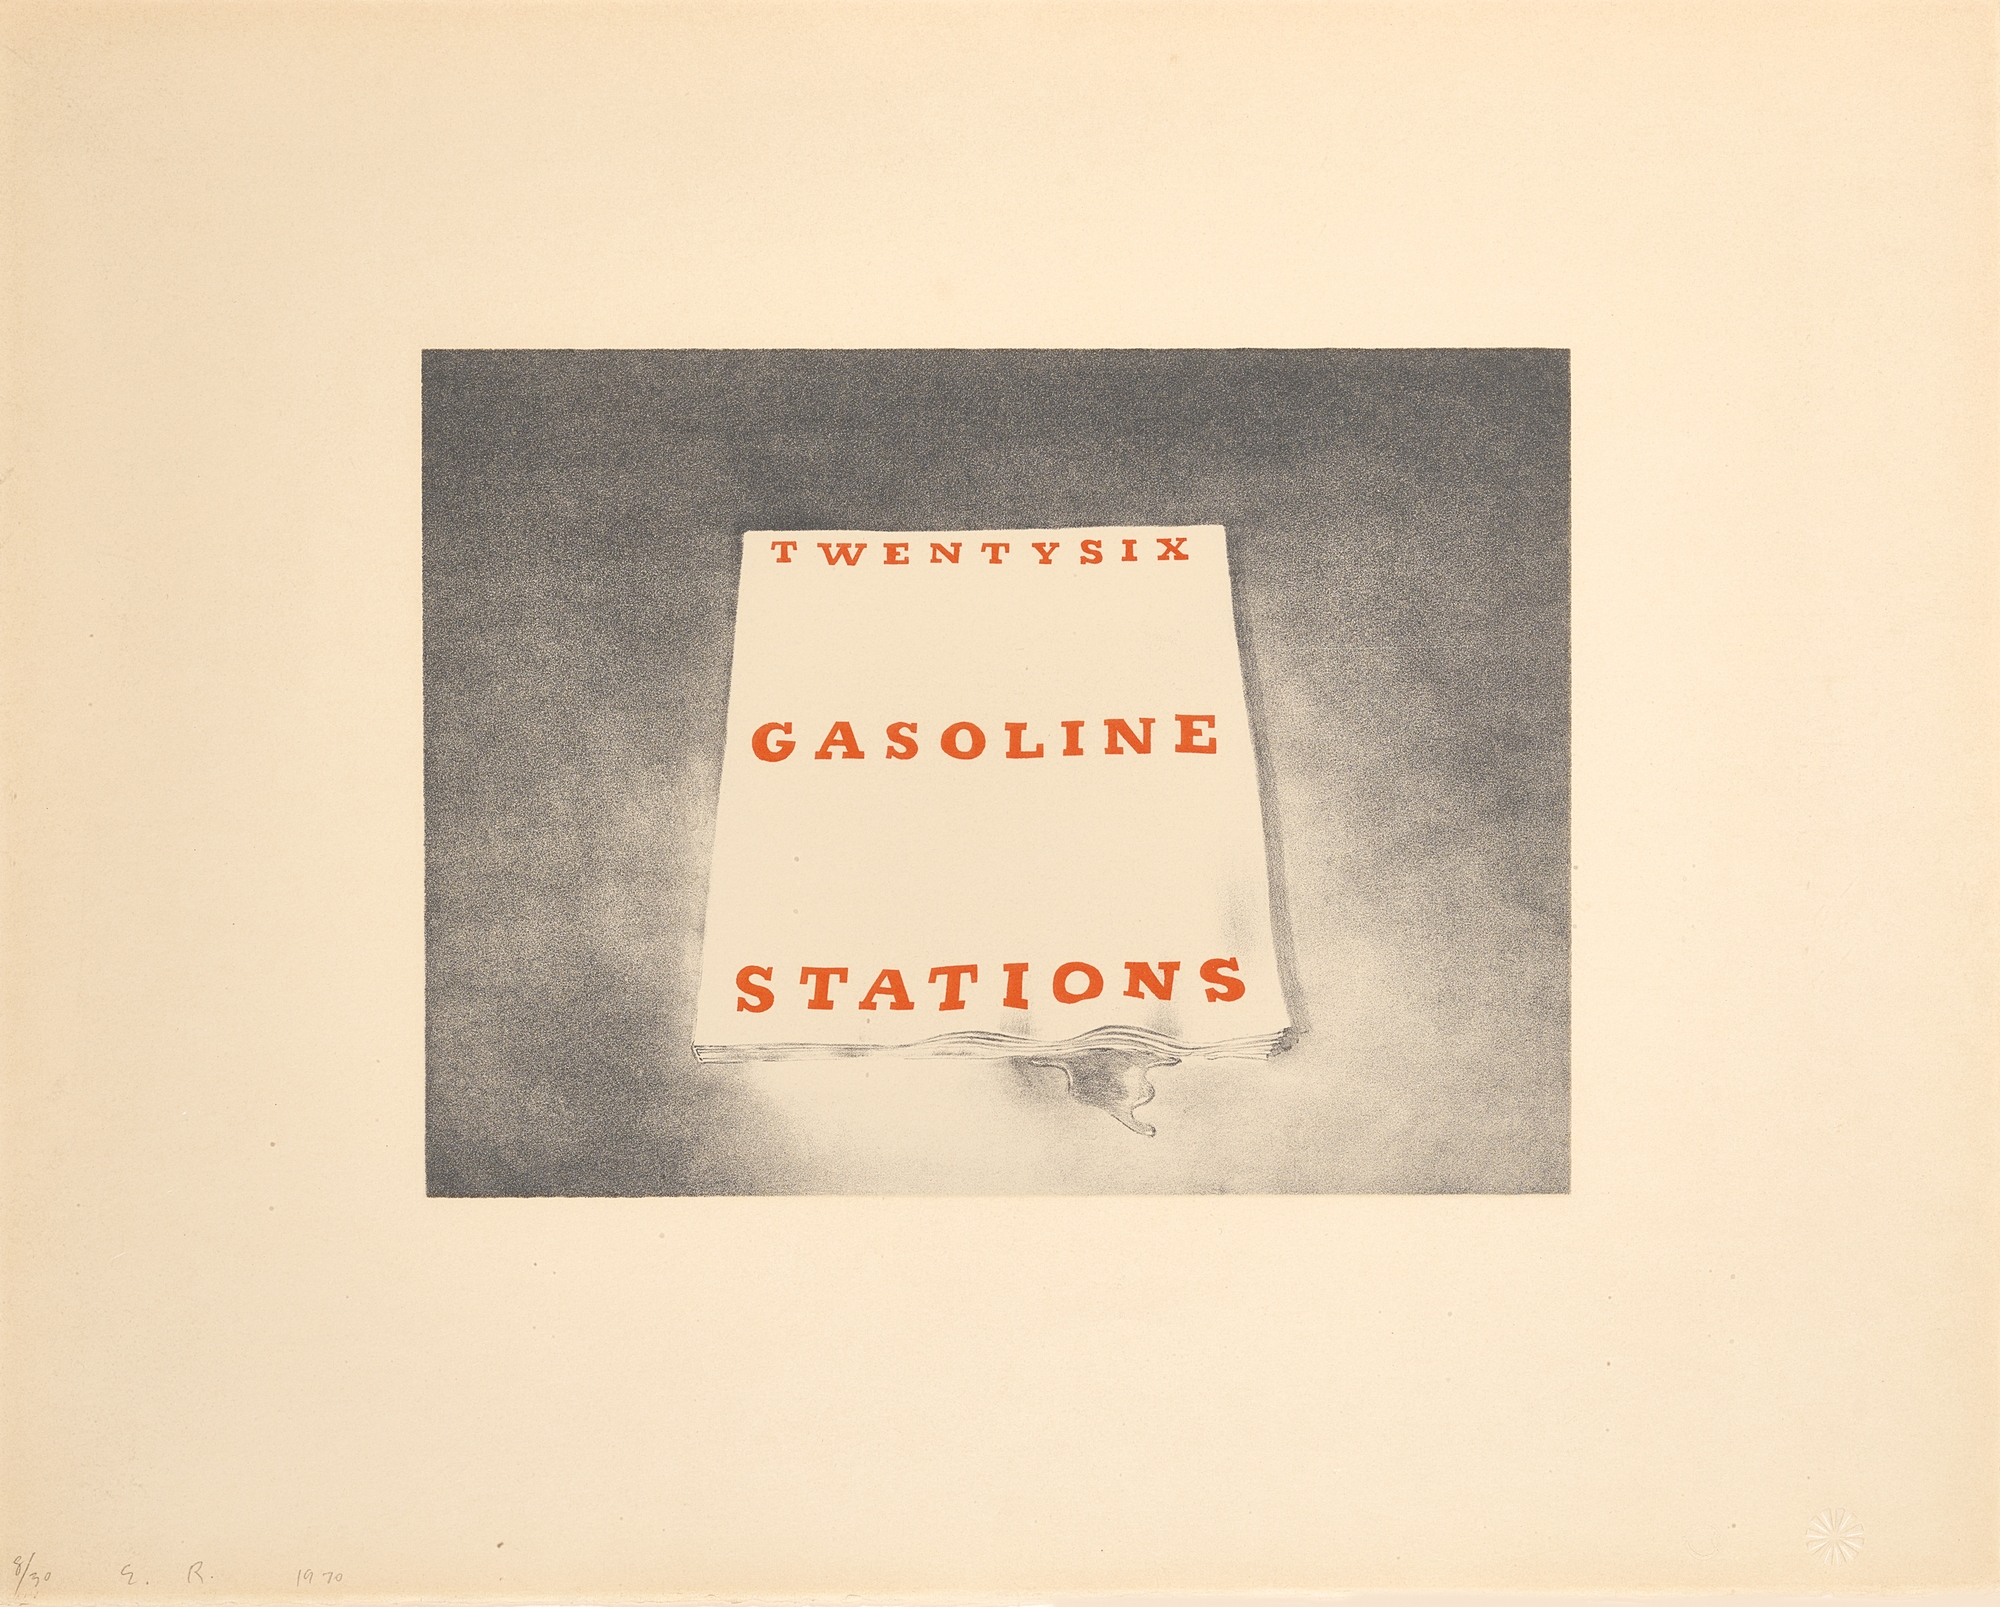 Twentysix Gasoline Stations by Ed Ruscha, 1970